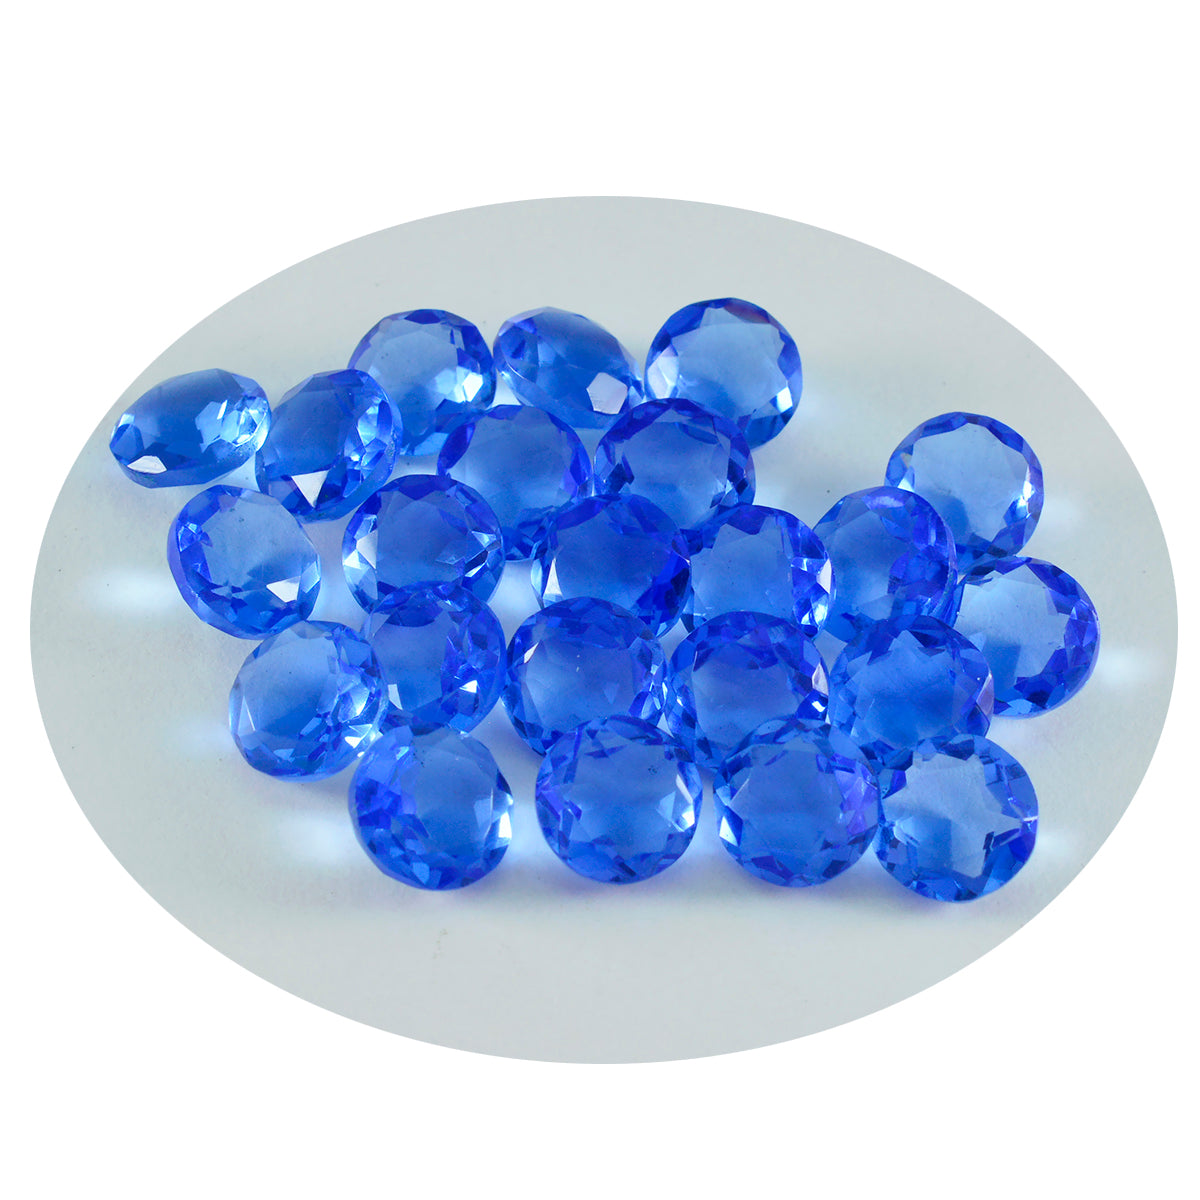 Riyogems 1PC Blue Sapphire CZ Faceted 5x5 mm Round Shape wonderful Quality Stone